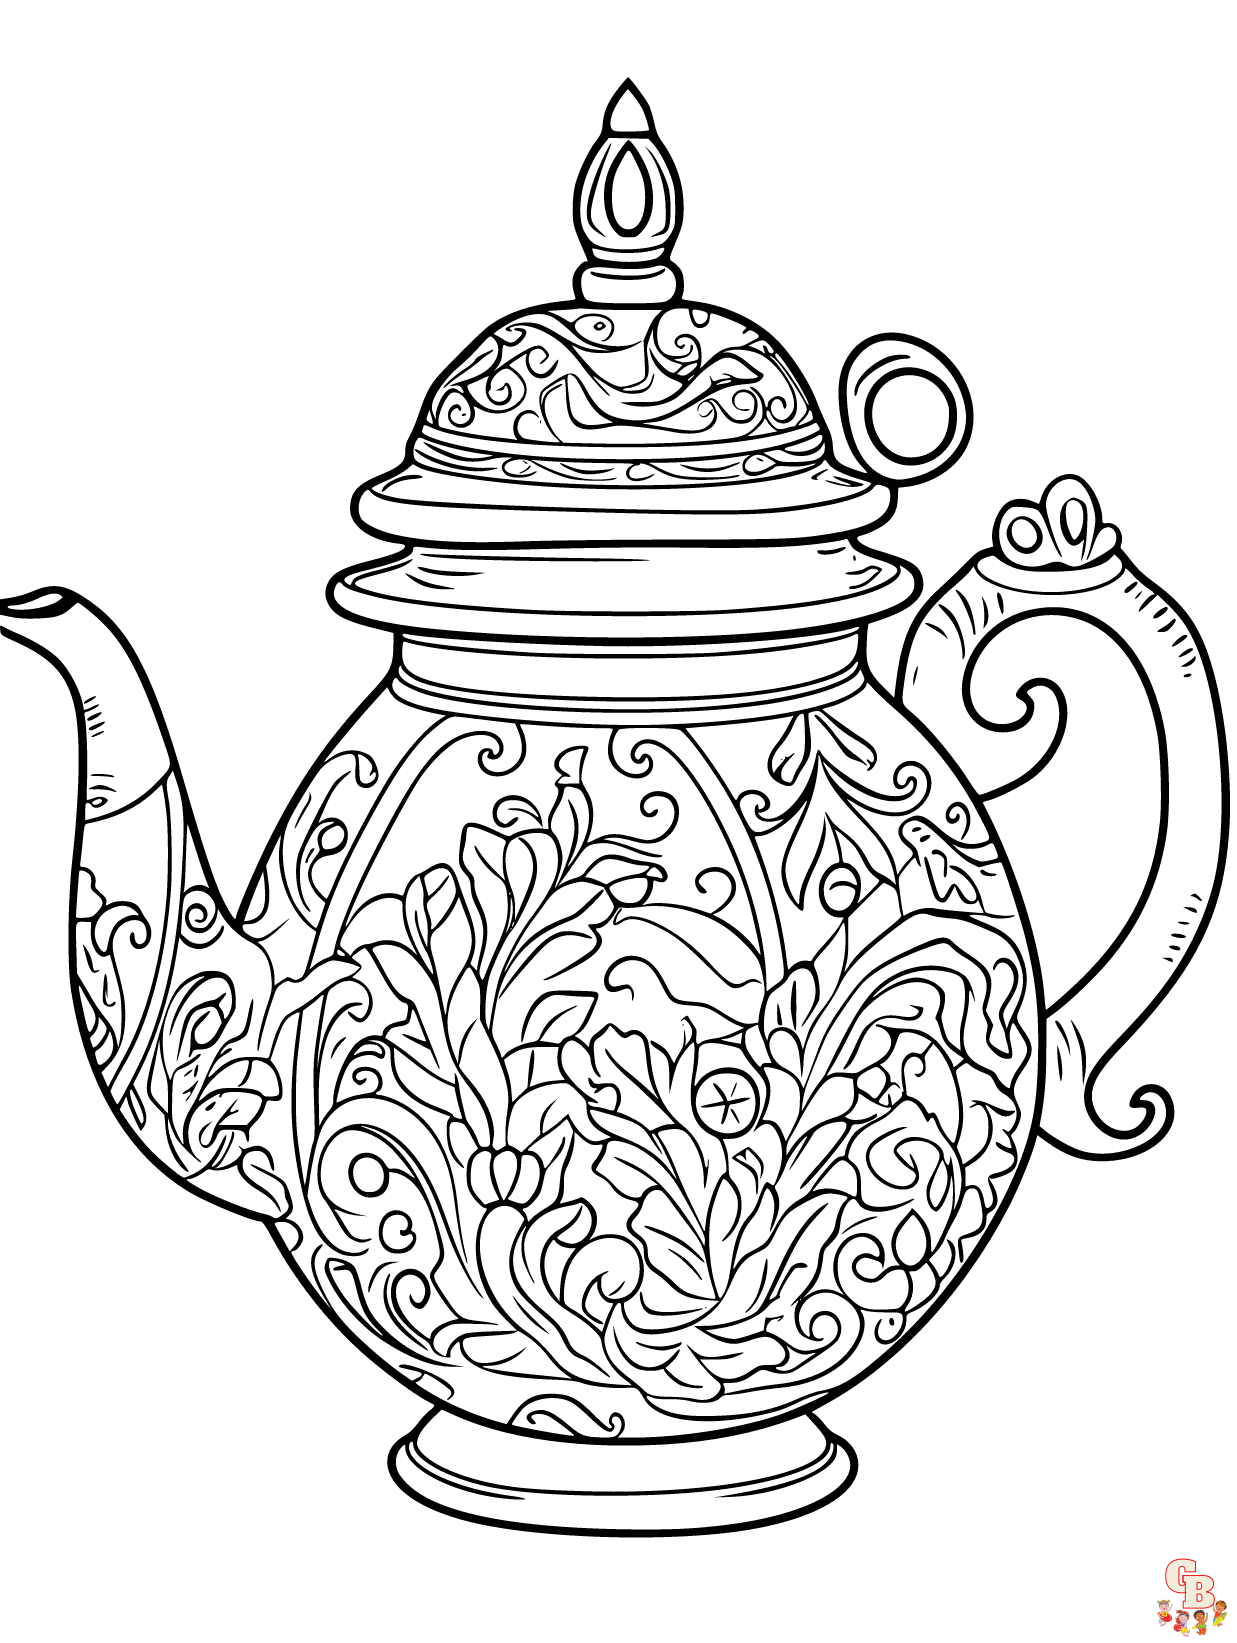 Teapot Coloring Pages